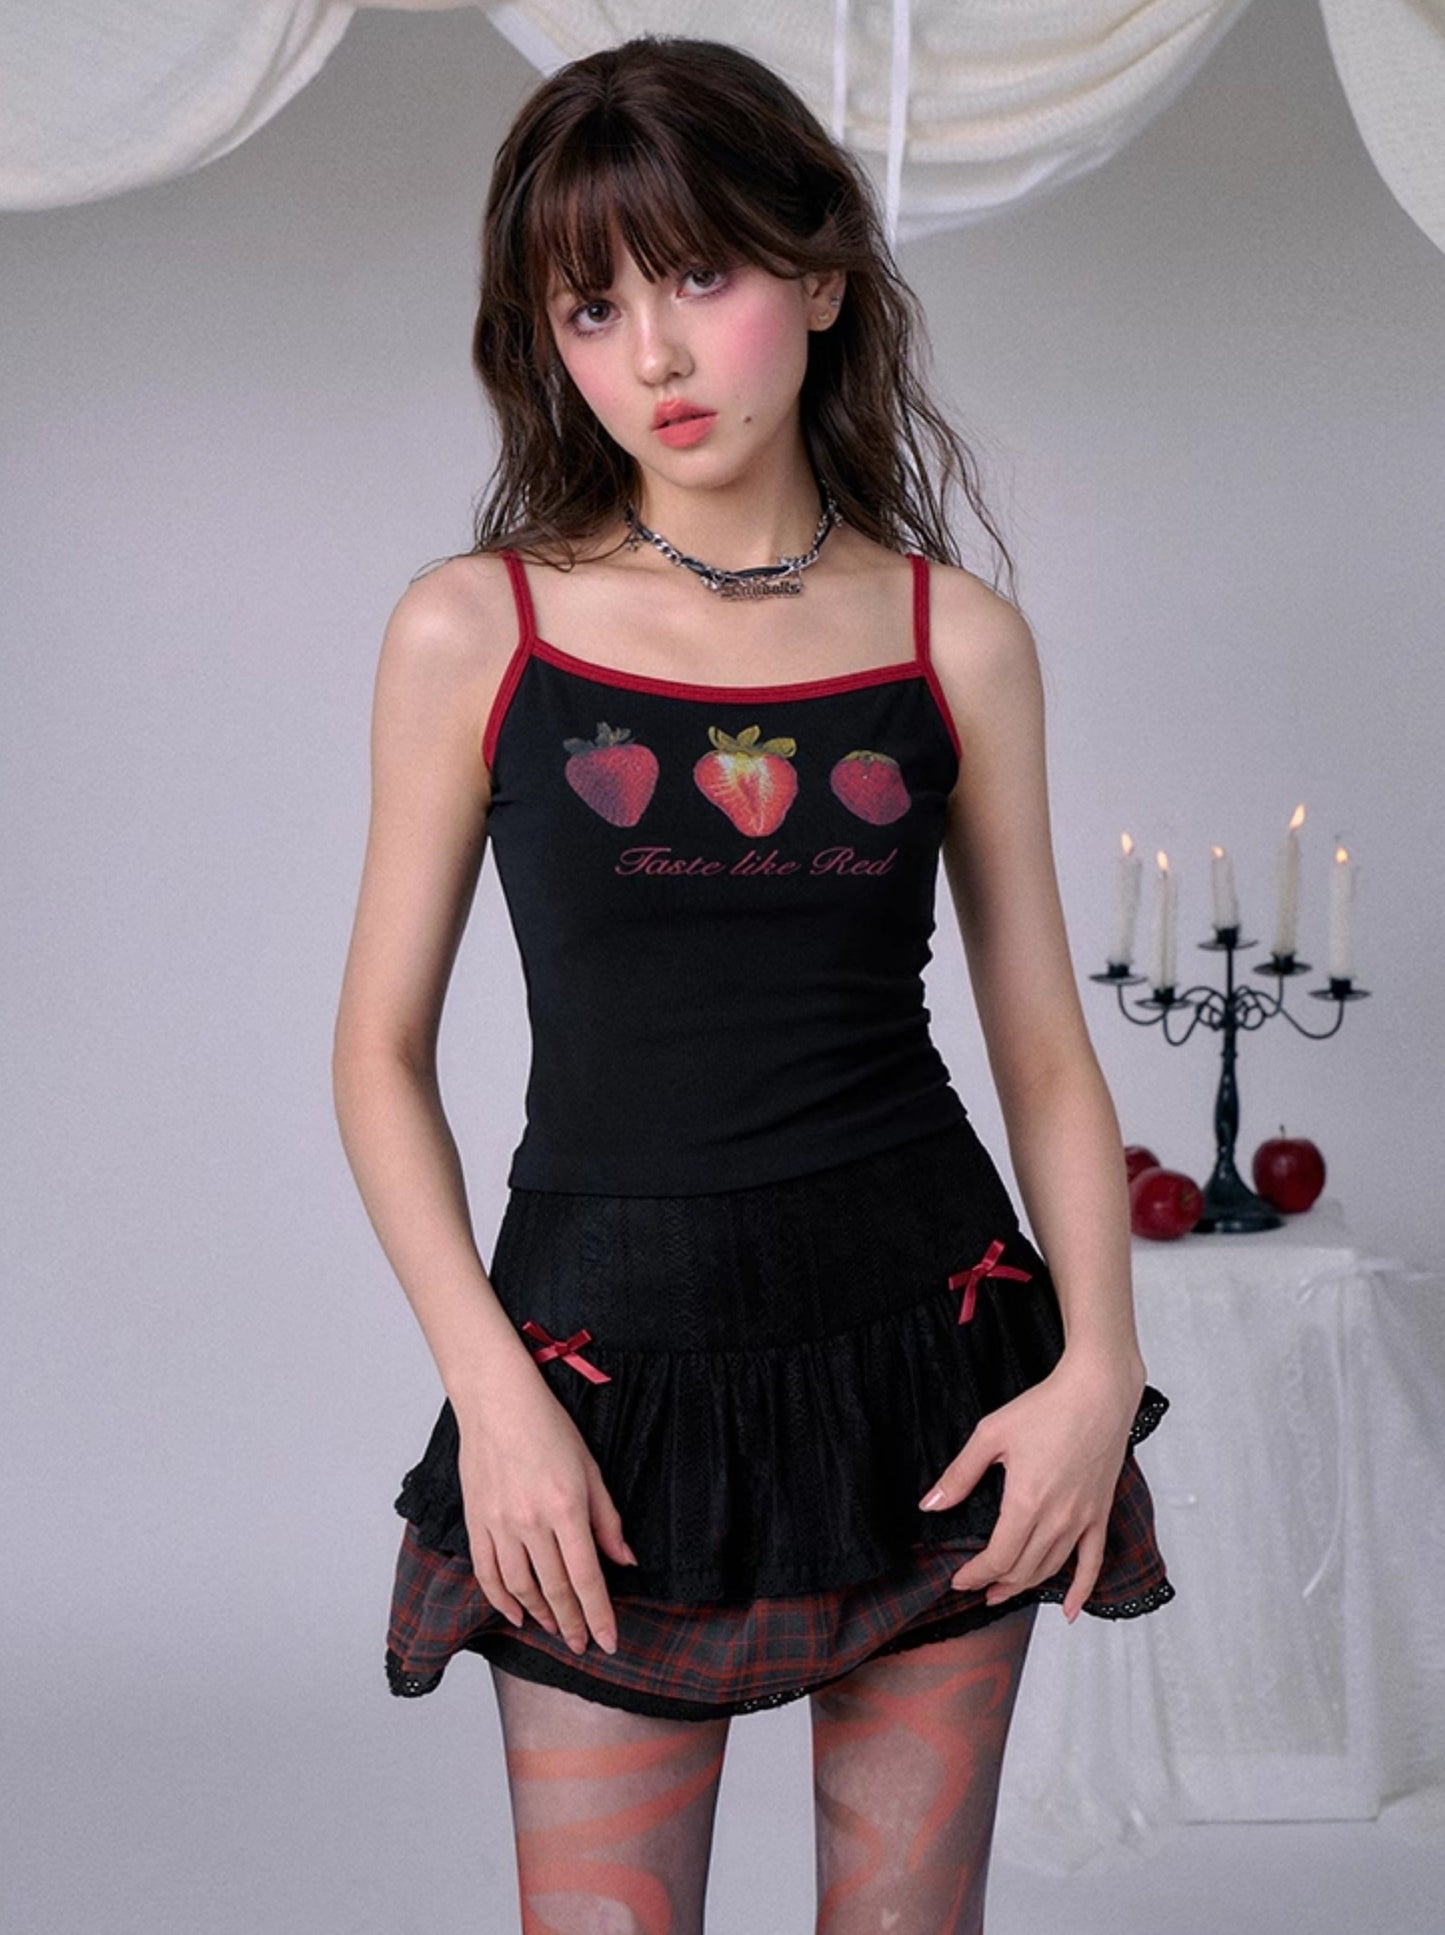 SagiDolls Girly Fighting Spirit #RedFlavour #Asian Girl Dark Lace Red Checkered Skirt Short Skirt Hot Punk